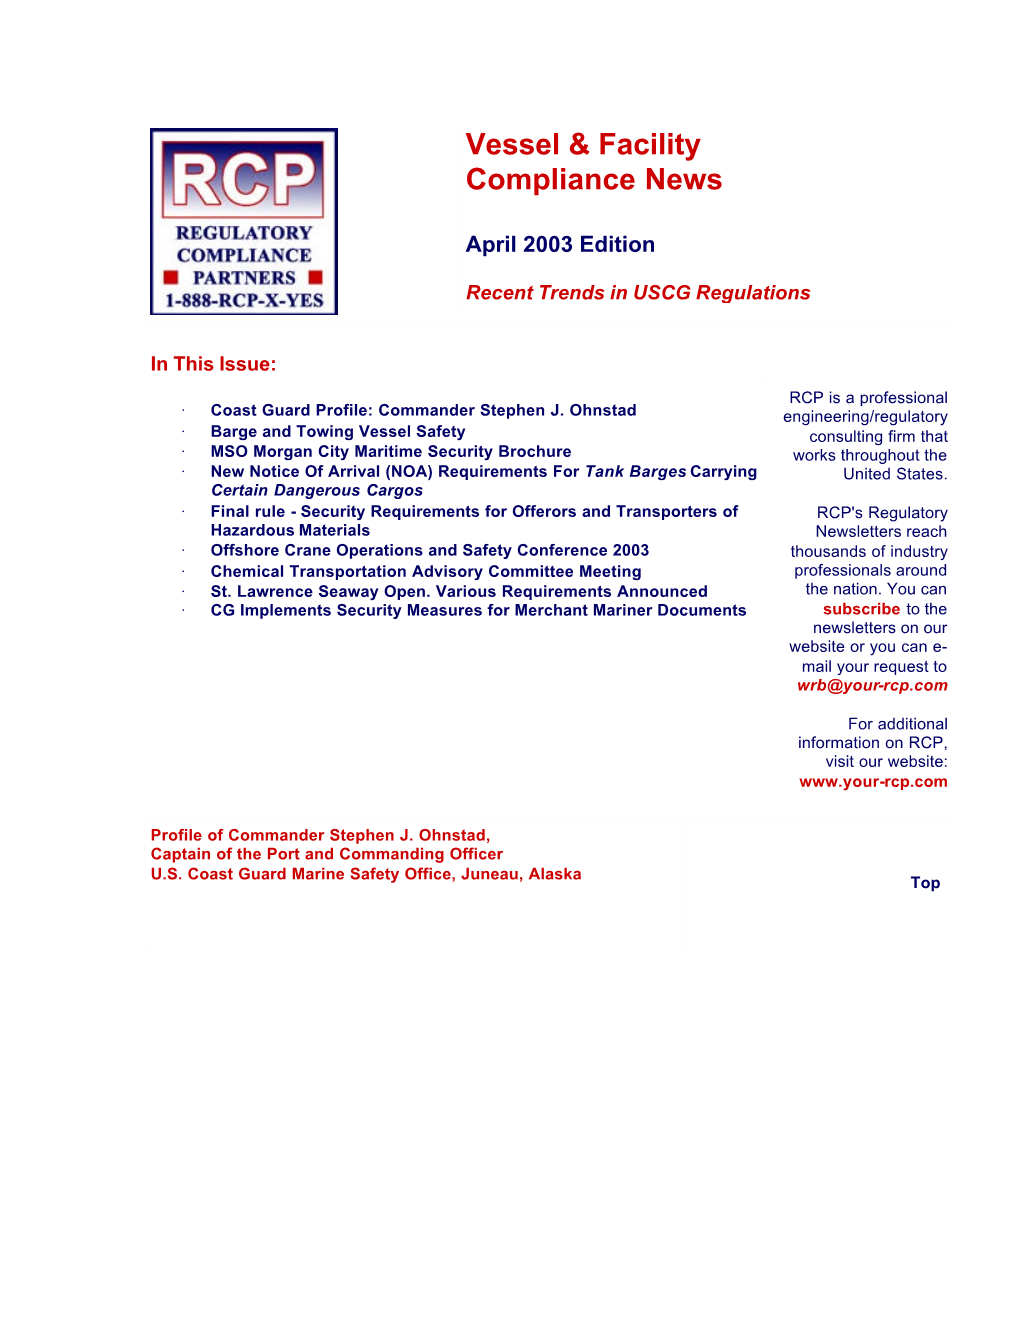 Vessel & Facility Compliance News 04-2003